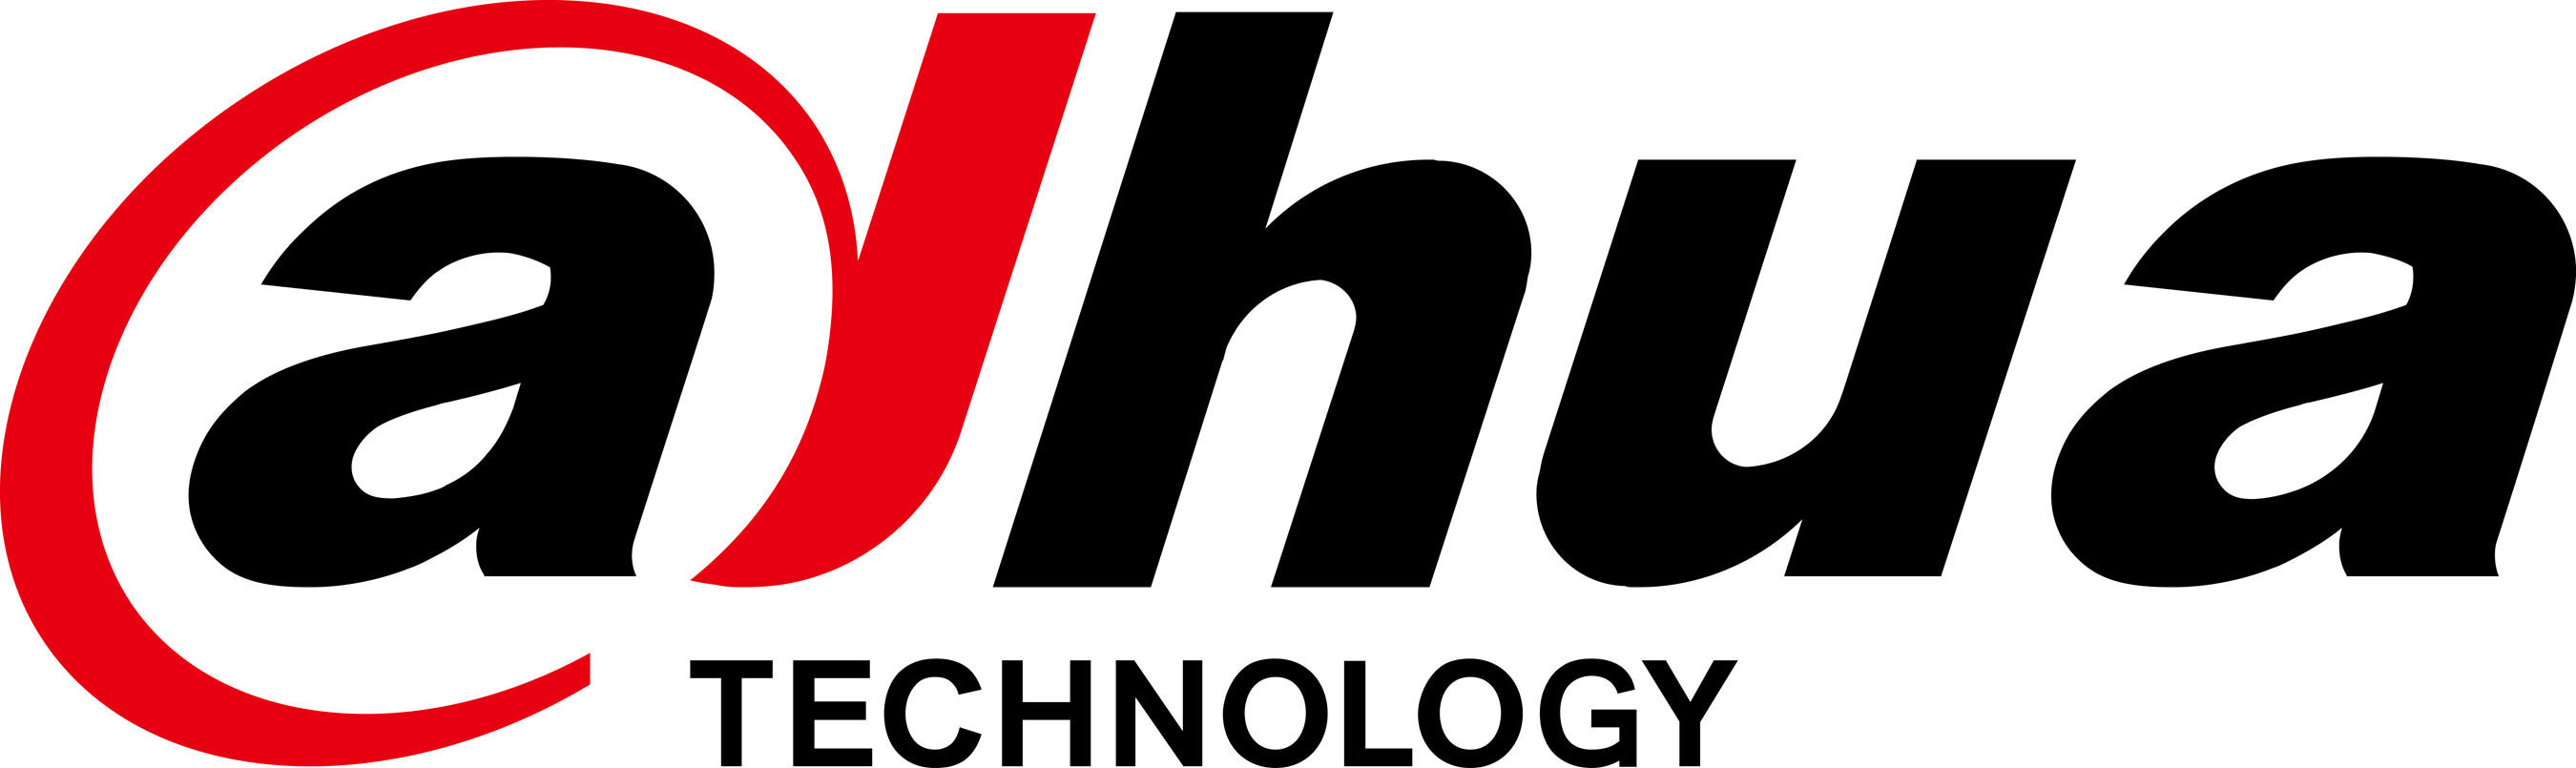 Dahua Technology logo. (PRNewsFoto/Dahua Technology) (PRNewsFoto/DAHUA TECHNOLOGY)